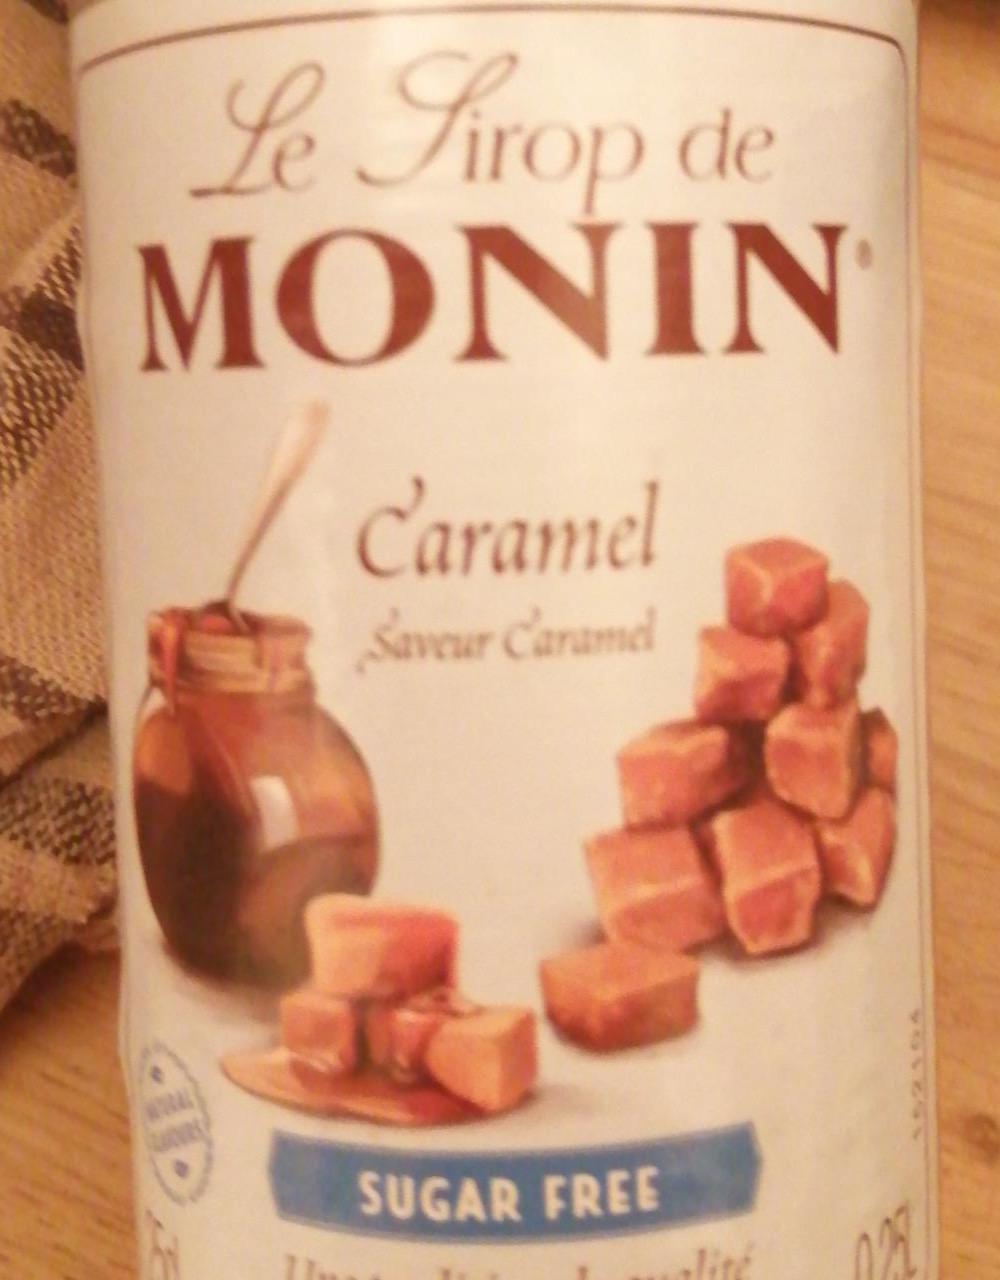 Képek - Caramel sugar free Monin